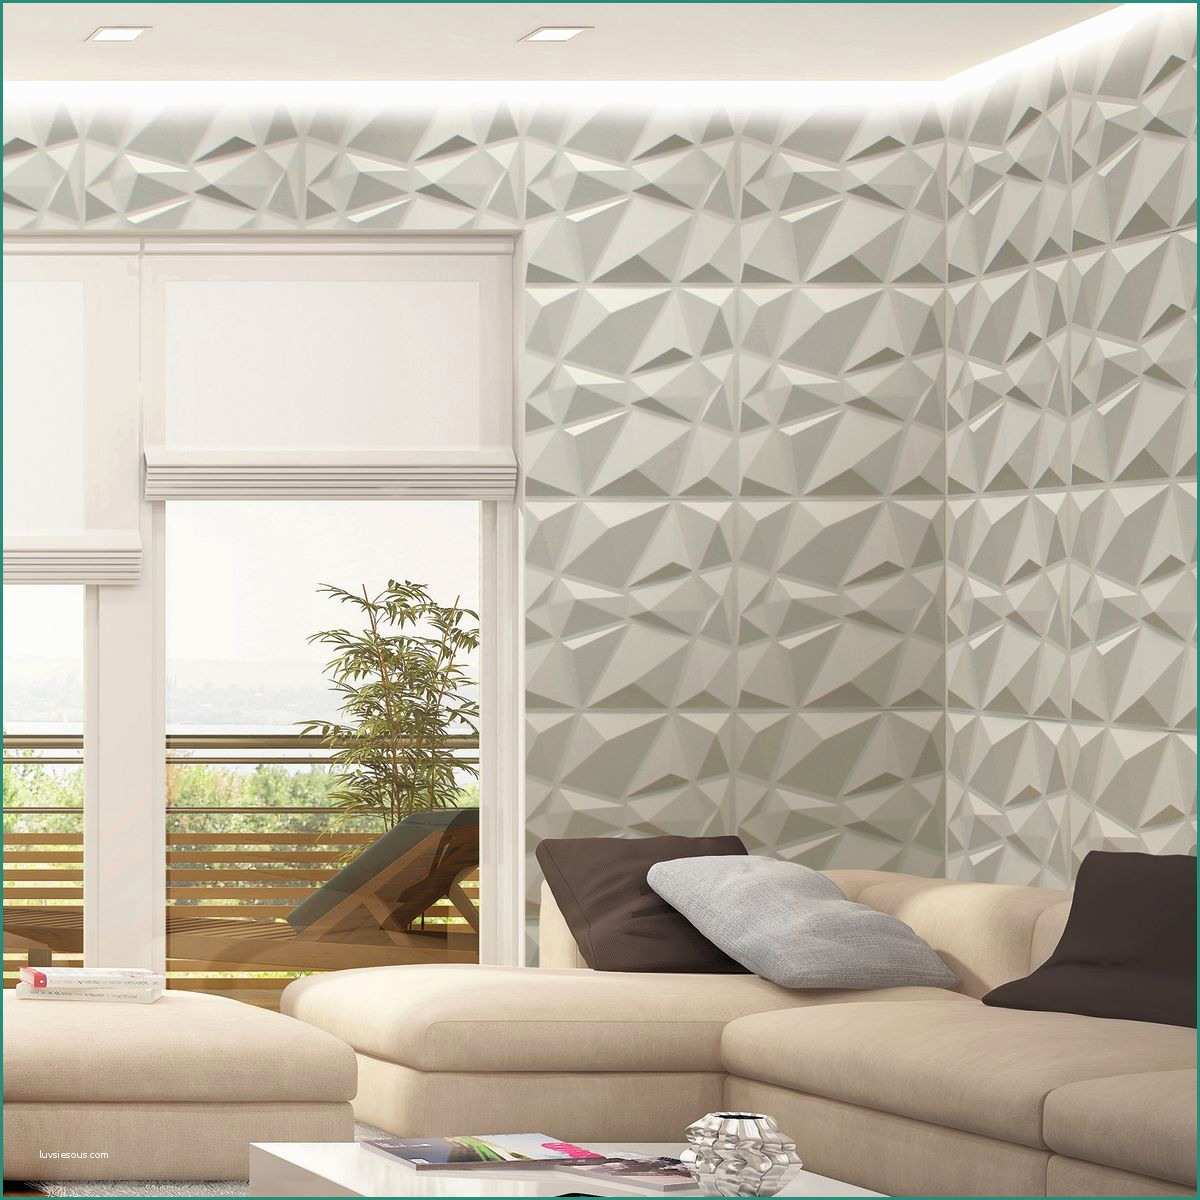 Pannelli polistirolo soffitto leroy merlin kinderzimmer for Pannelli decorativi in polistirolo pareti interne